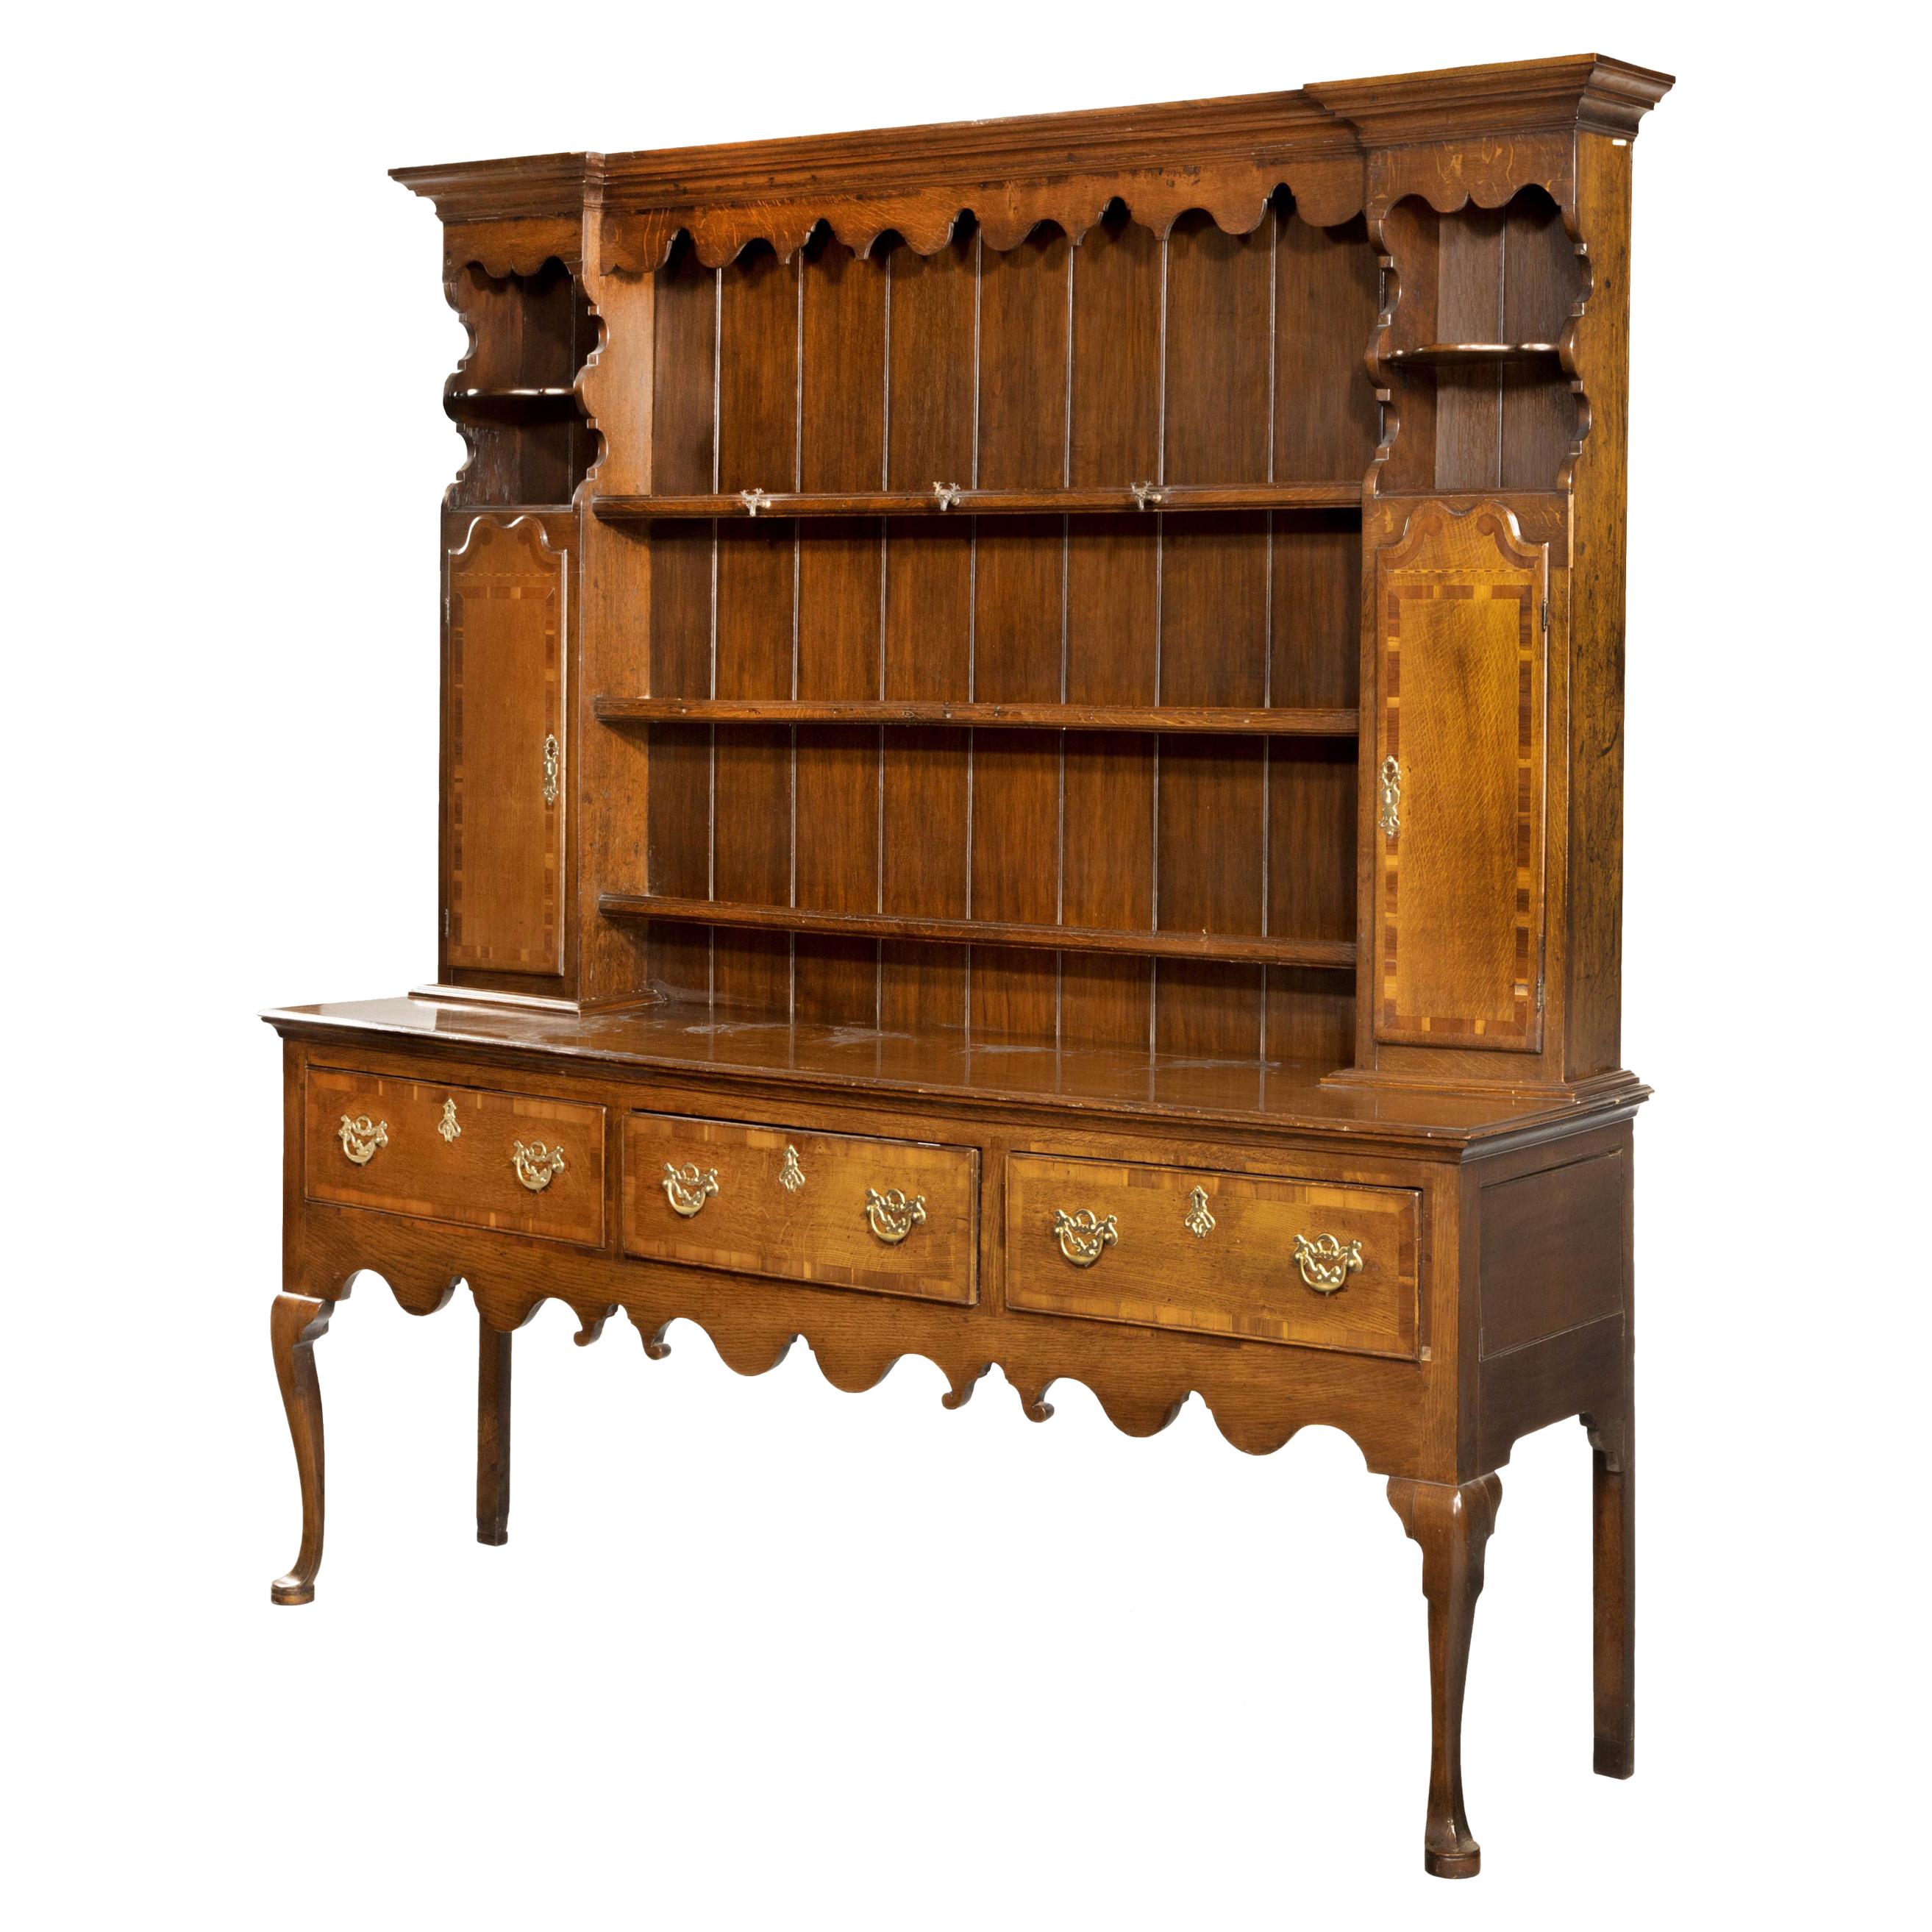 Good Mid-18th Century Oak Dresser and Rack